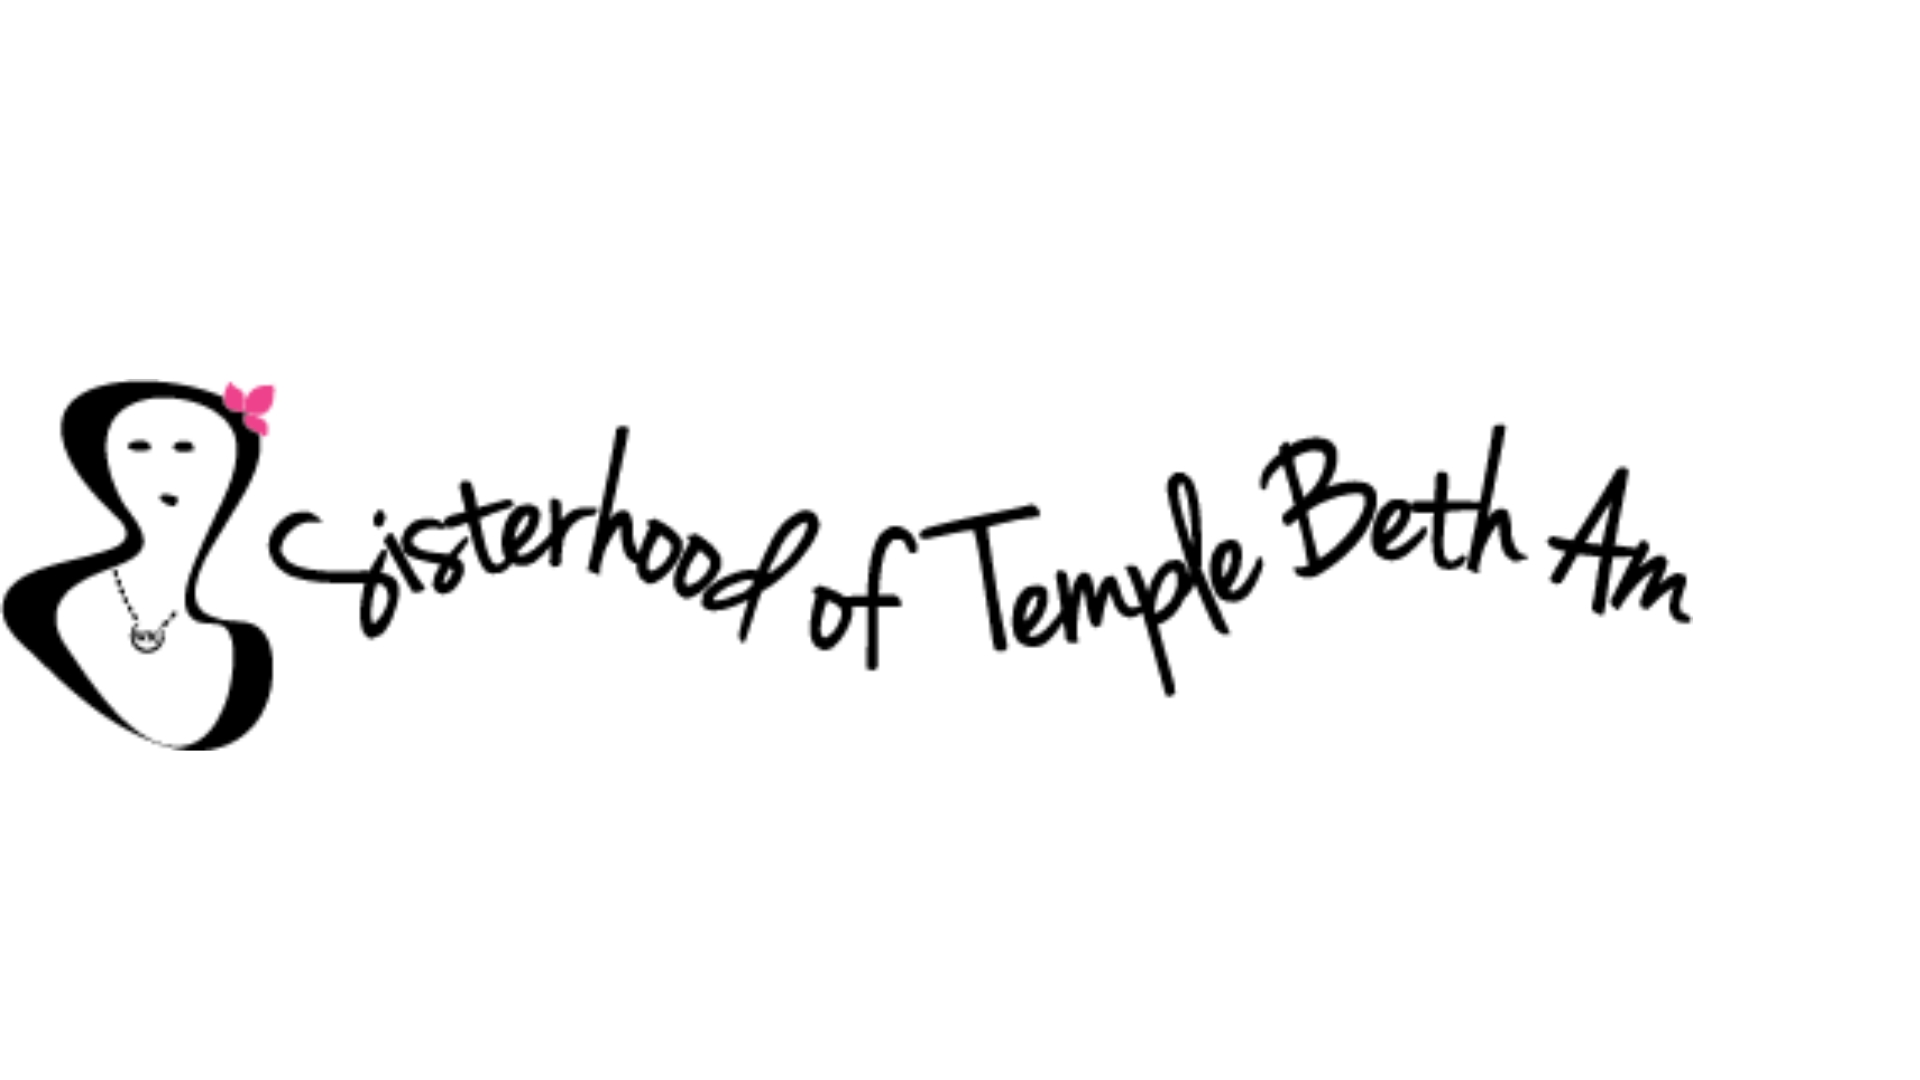 logo for Sisterhood of Temple Beth Am